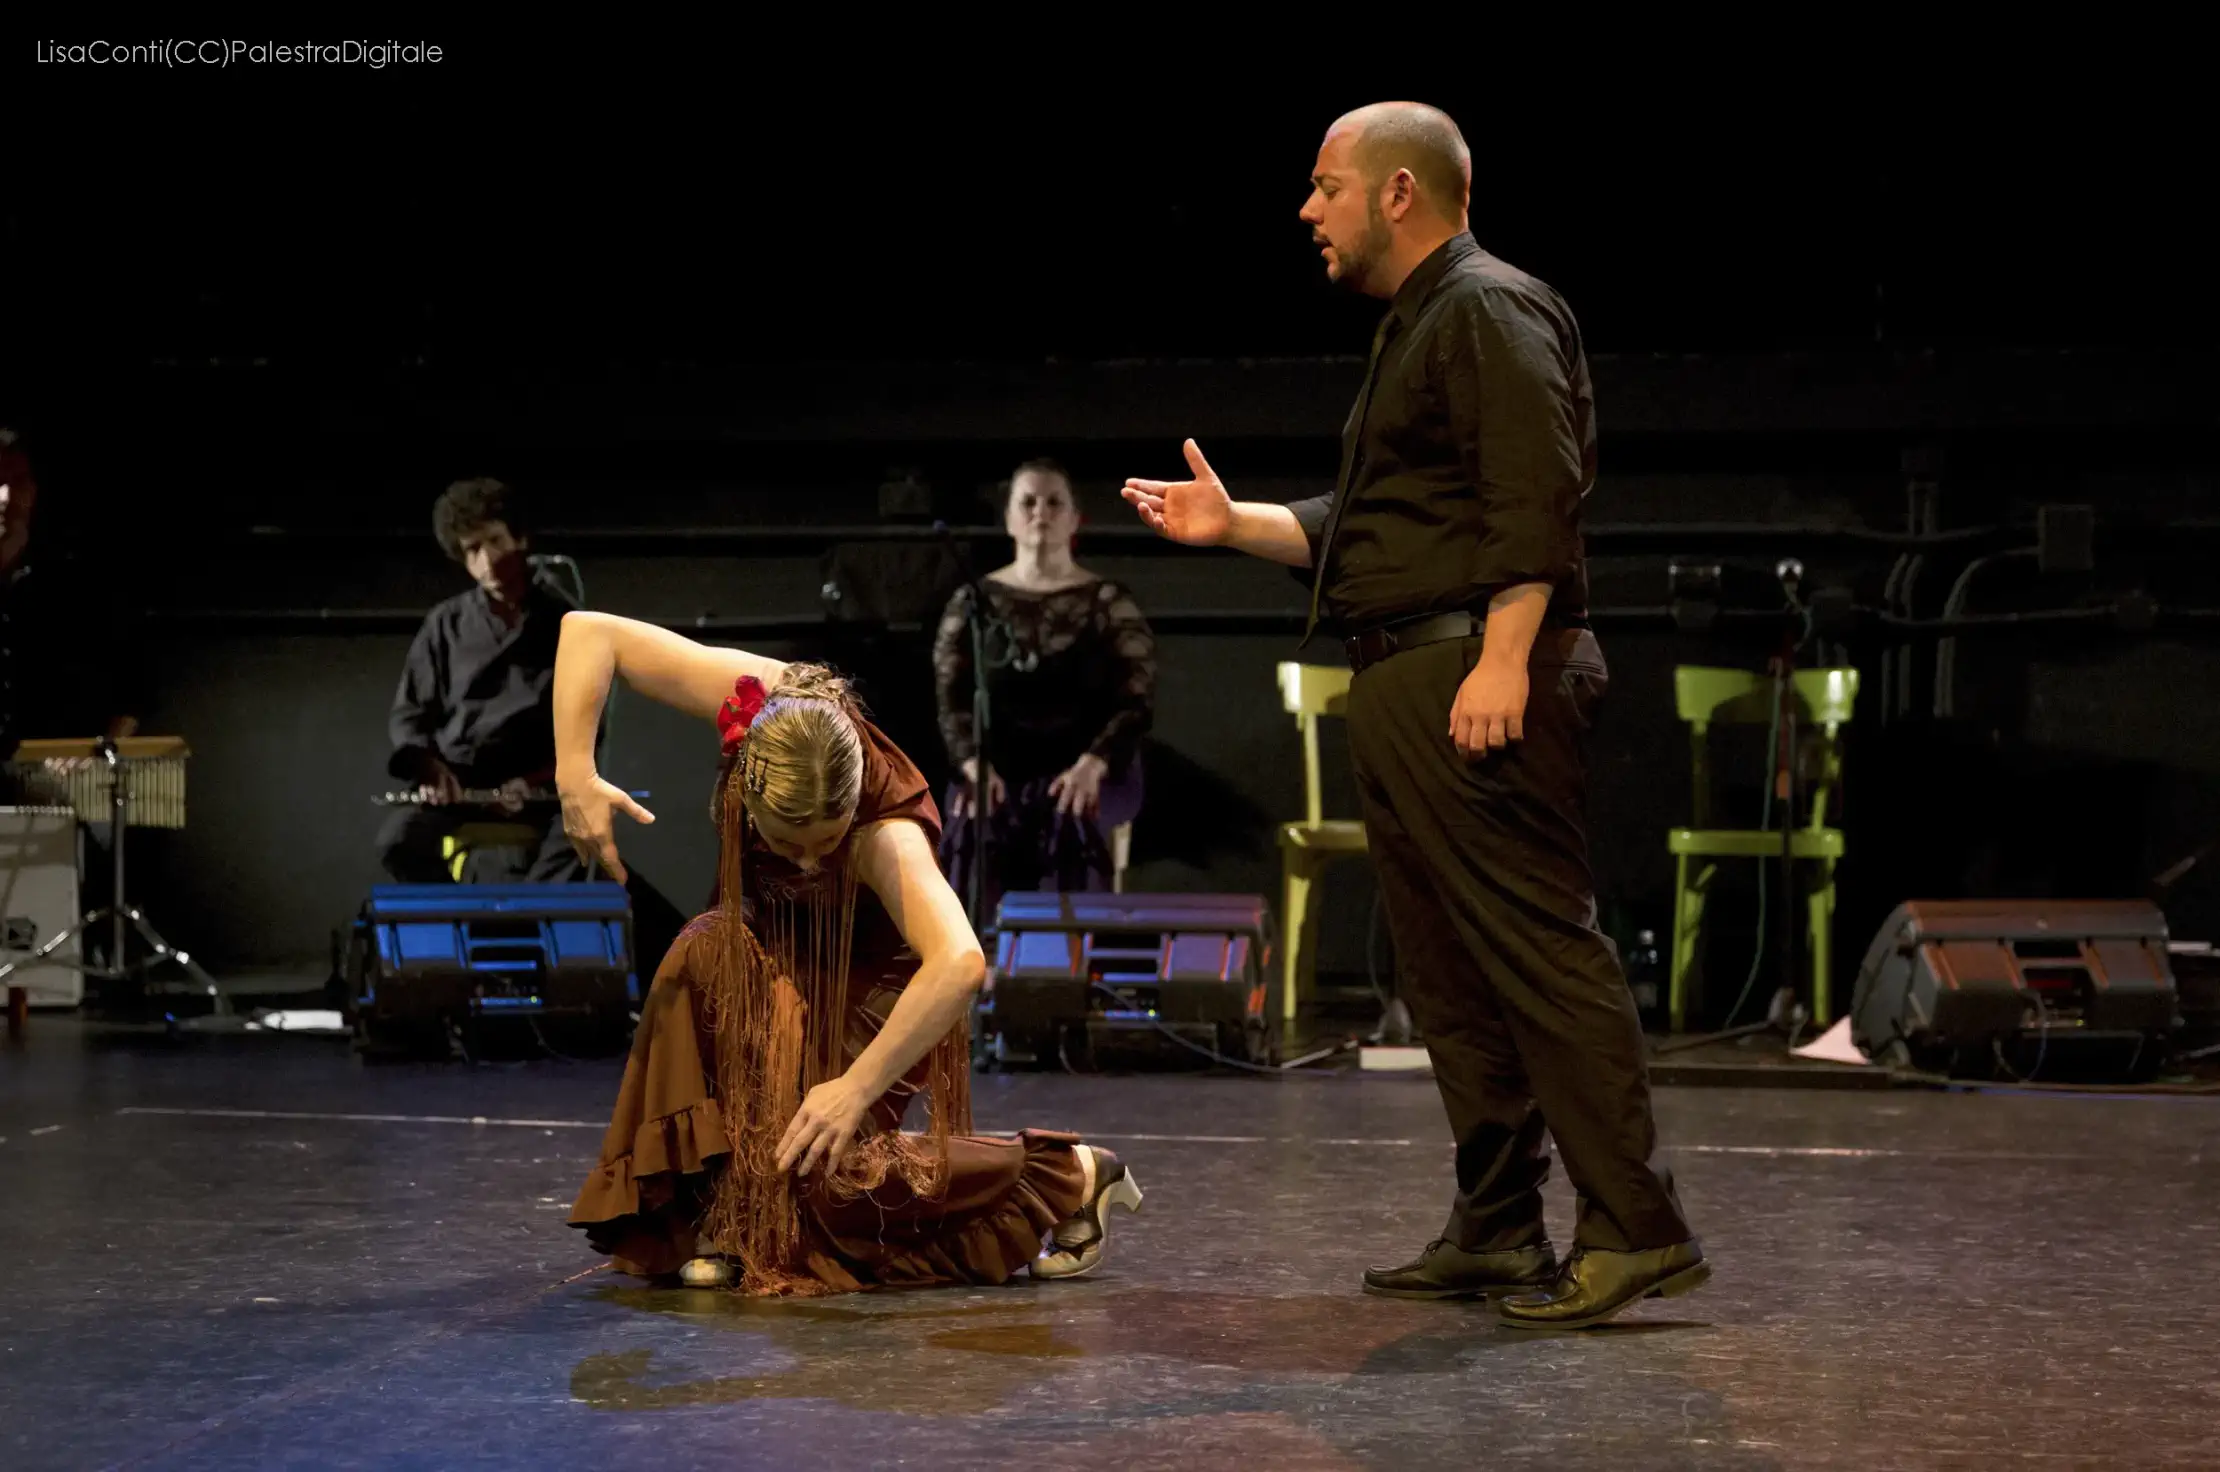 Saggio di Flamenco contemporaneo con Sabina Todaro e Jeromo Segura a Milano